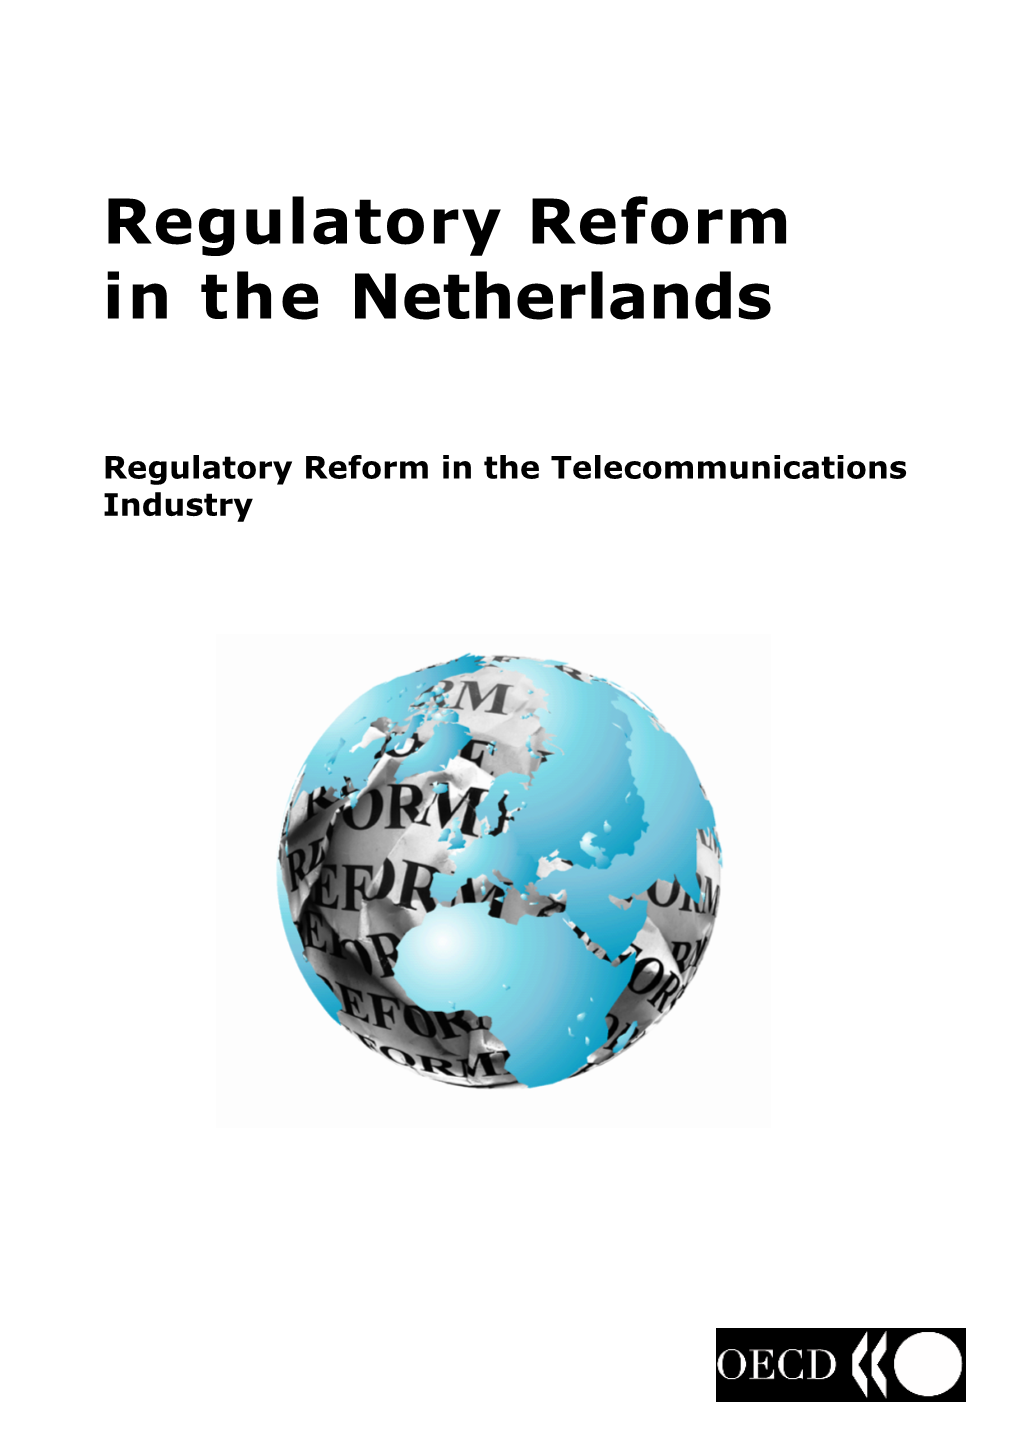 Regulator\ Reform in the Netherlands